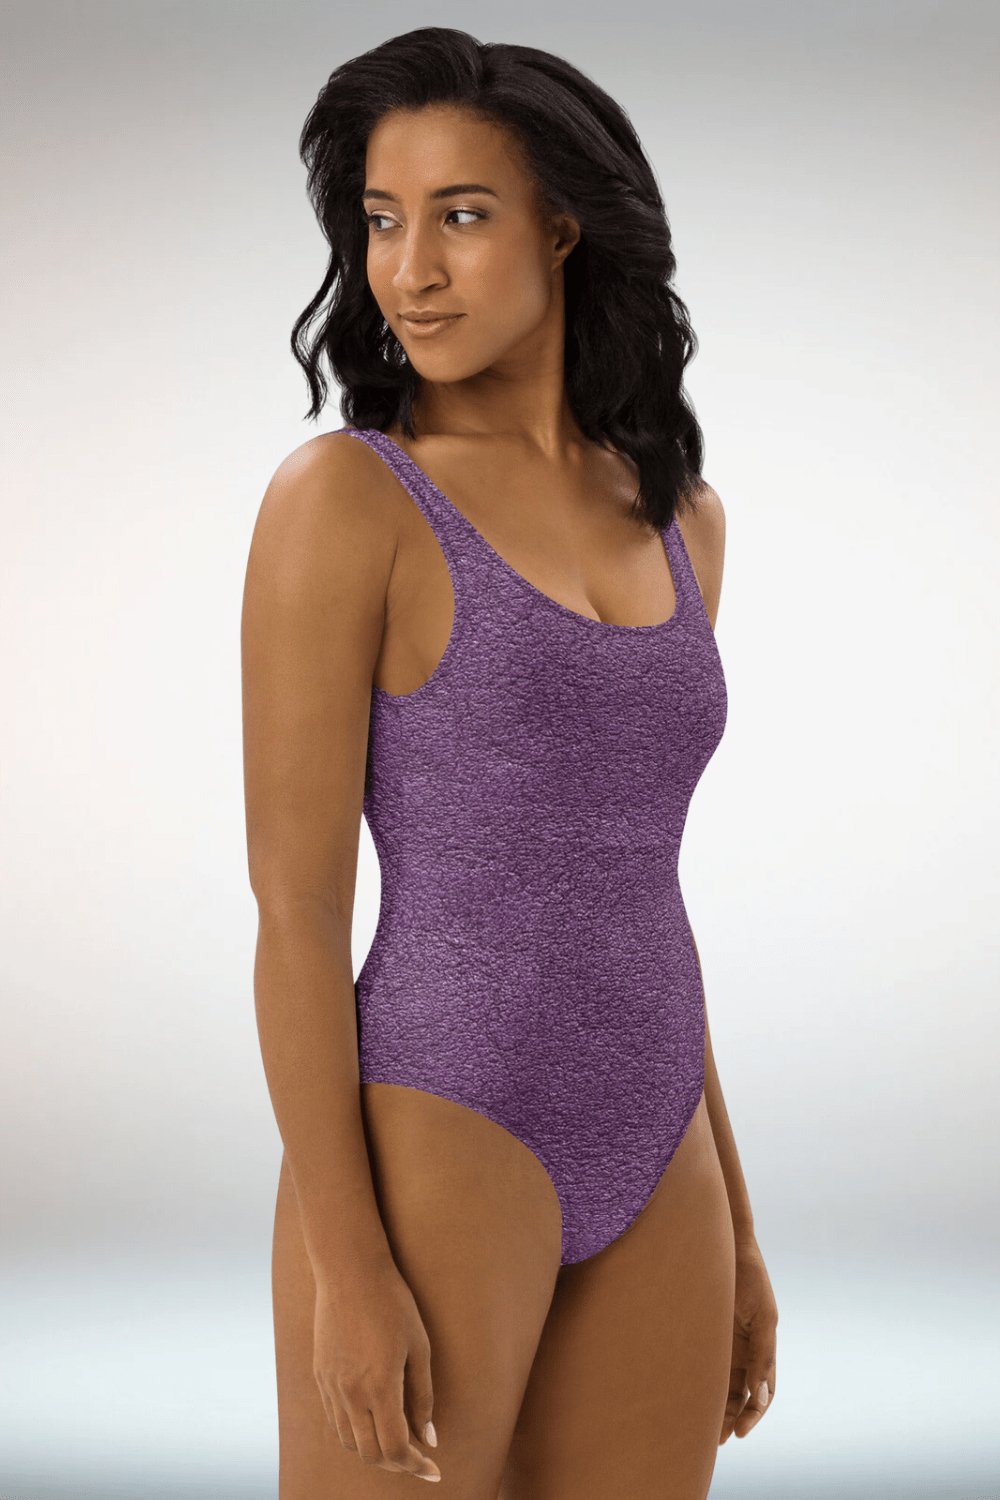 Leather Print Purple One Piece Swimsuit - TGC Boutique - One Piece Swimsuit